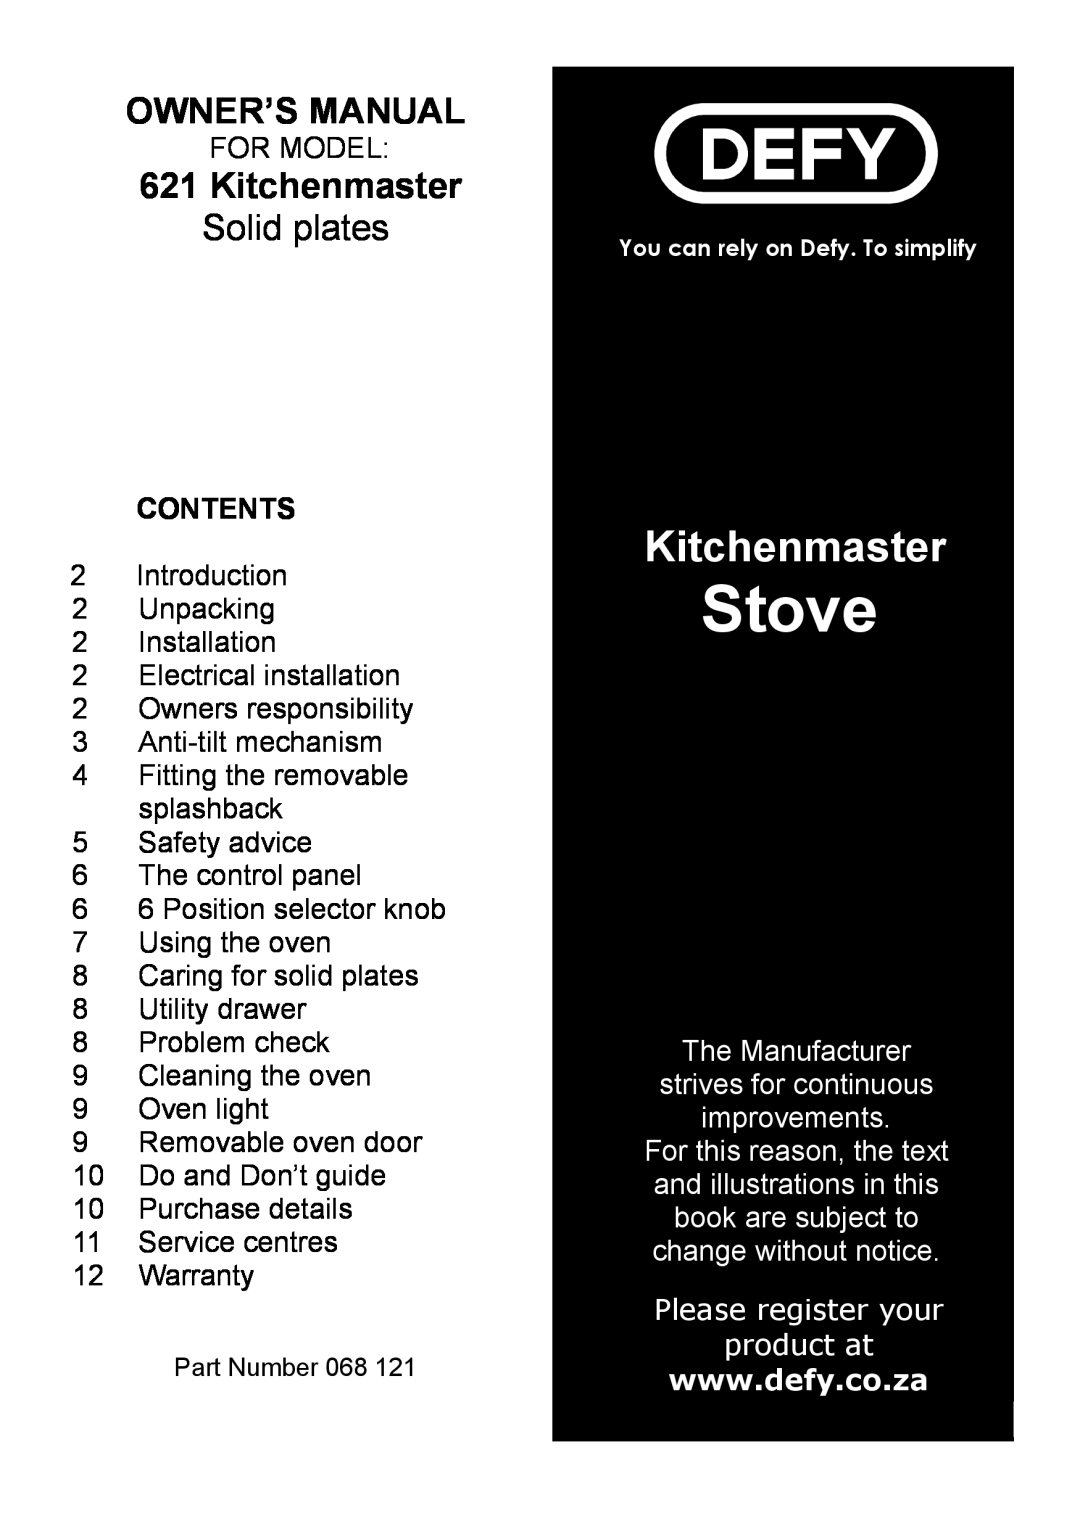 Defy Appliances 621 Kitchenmaster manual 2$#$, 9 $#, $0 5 1$, # % $$, $% 7 -0# $$, $0# $% 9 2$ 9 $, #*3# #$, $$$$ 